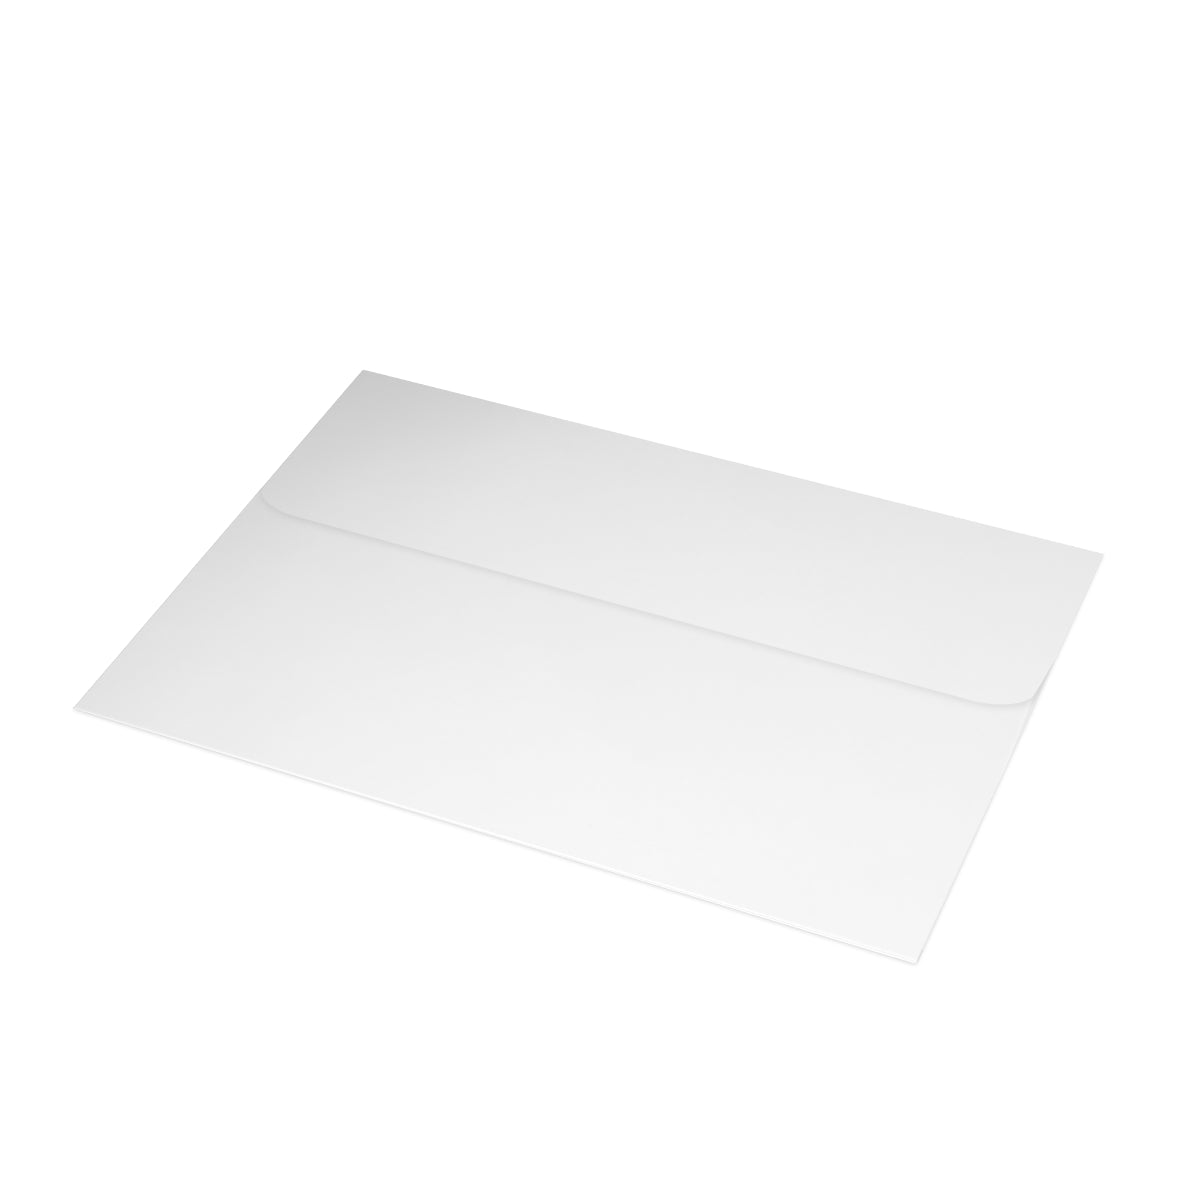 Grand Canyon National Park Matte Folded Notecards + Envelopes (10pcs)